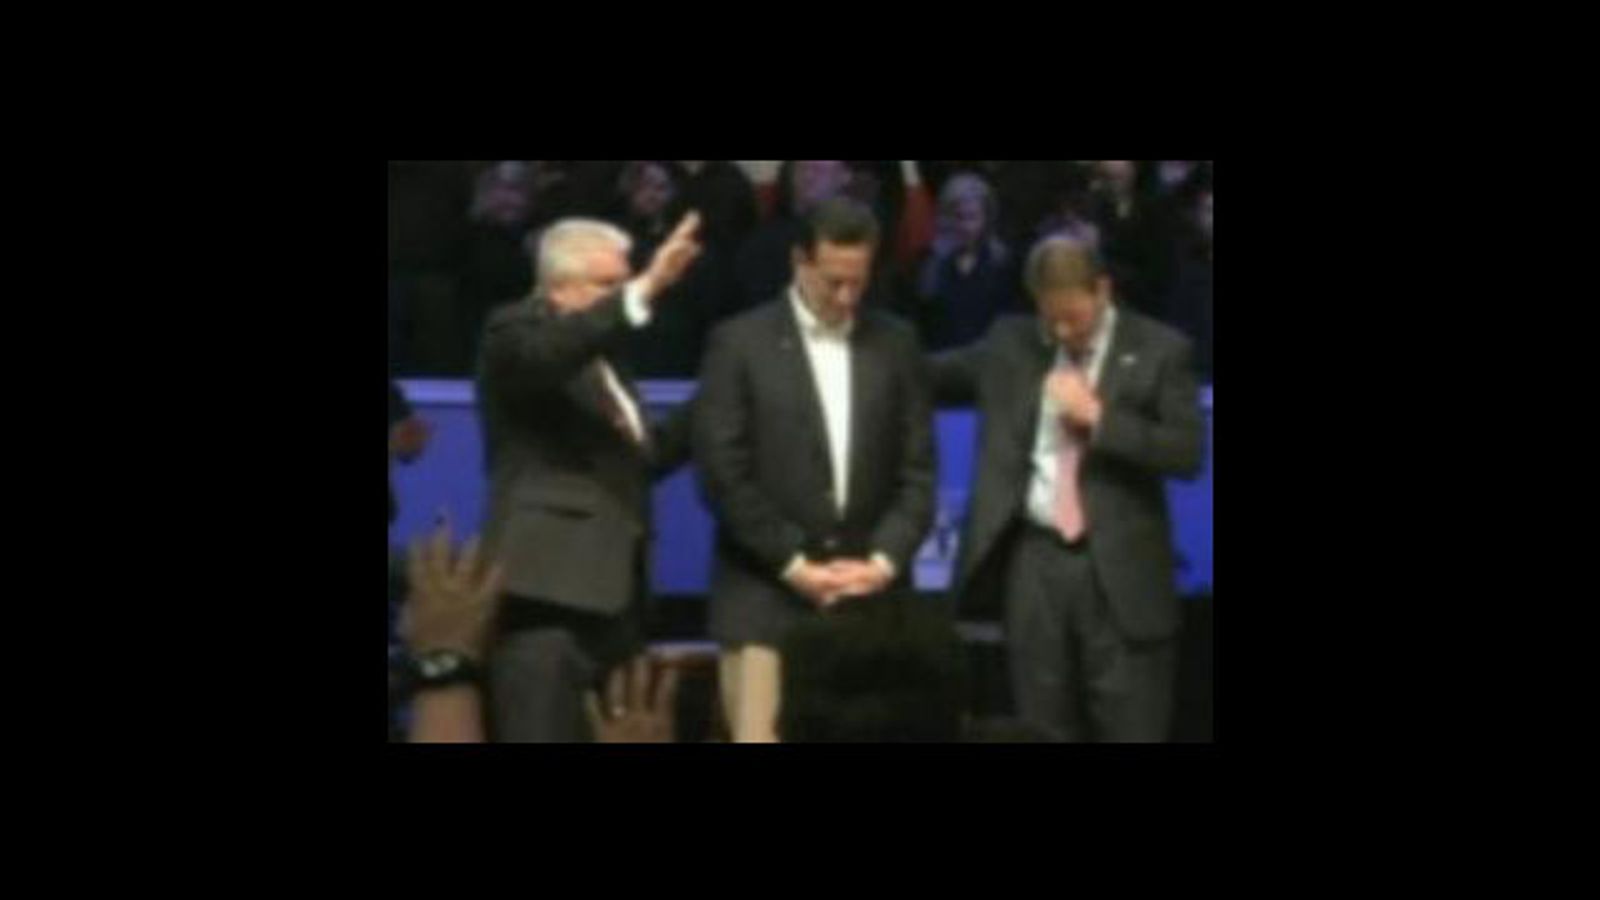 Preacher Calls for Theocracy in America at Santorum Rally